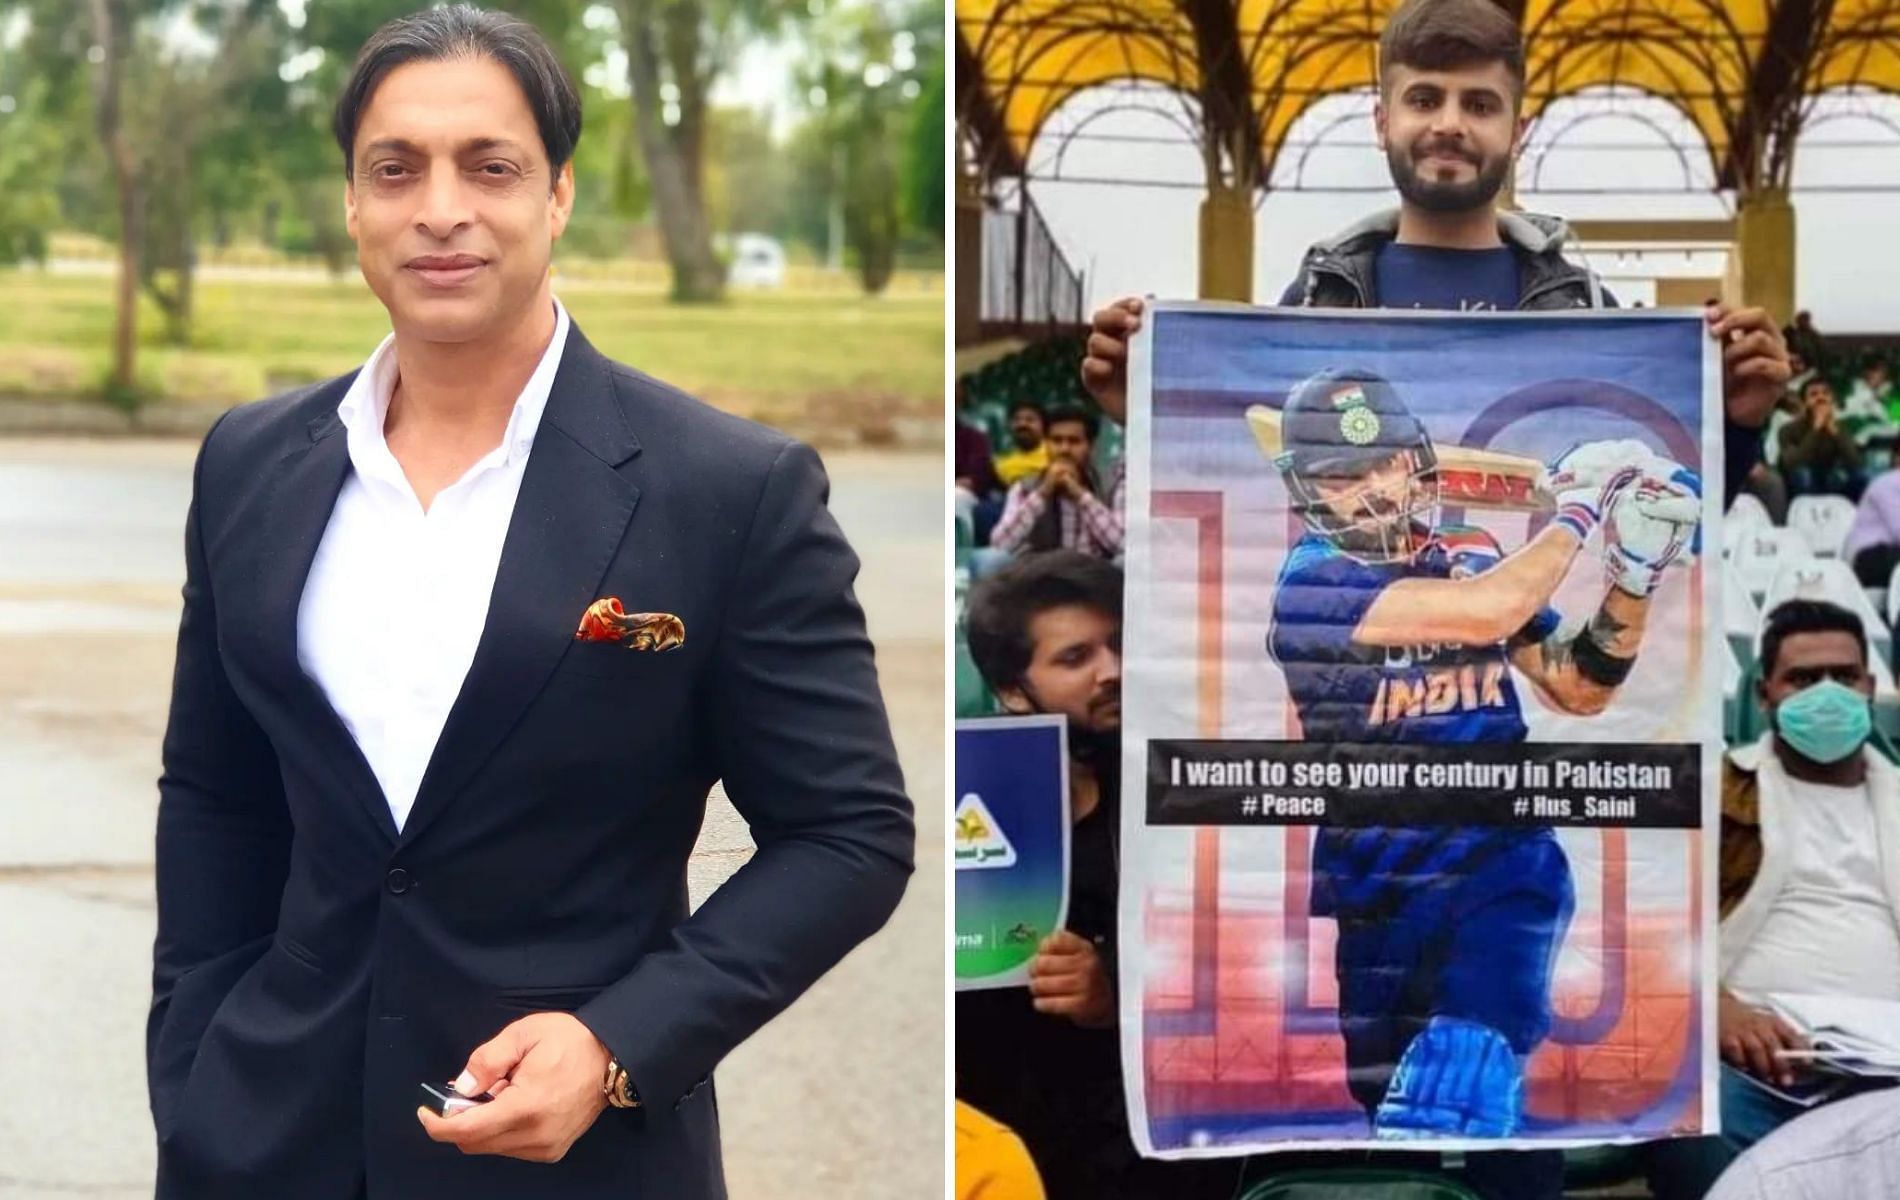 Shoaib Akhtar Reacts To Picture Of Pakistani Fan Holding Virat Kohli’s Poster During PSL 2022 Match